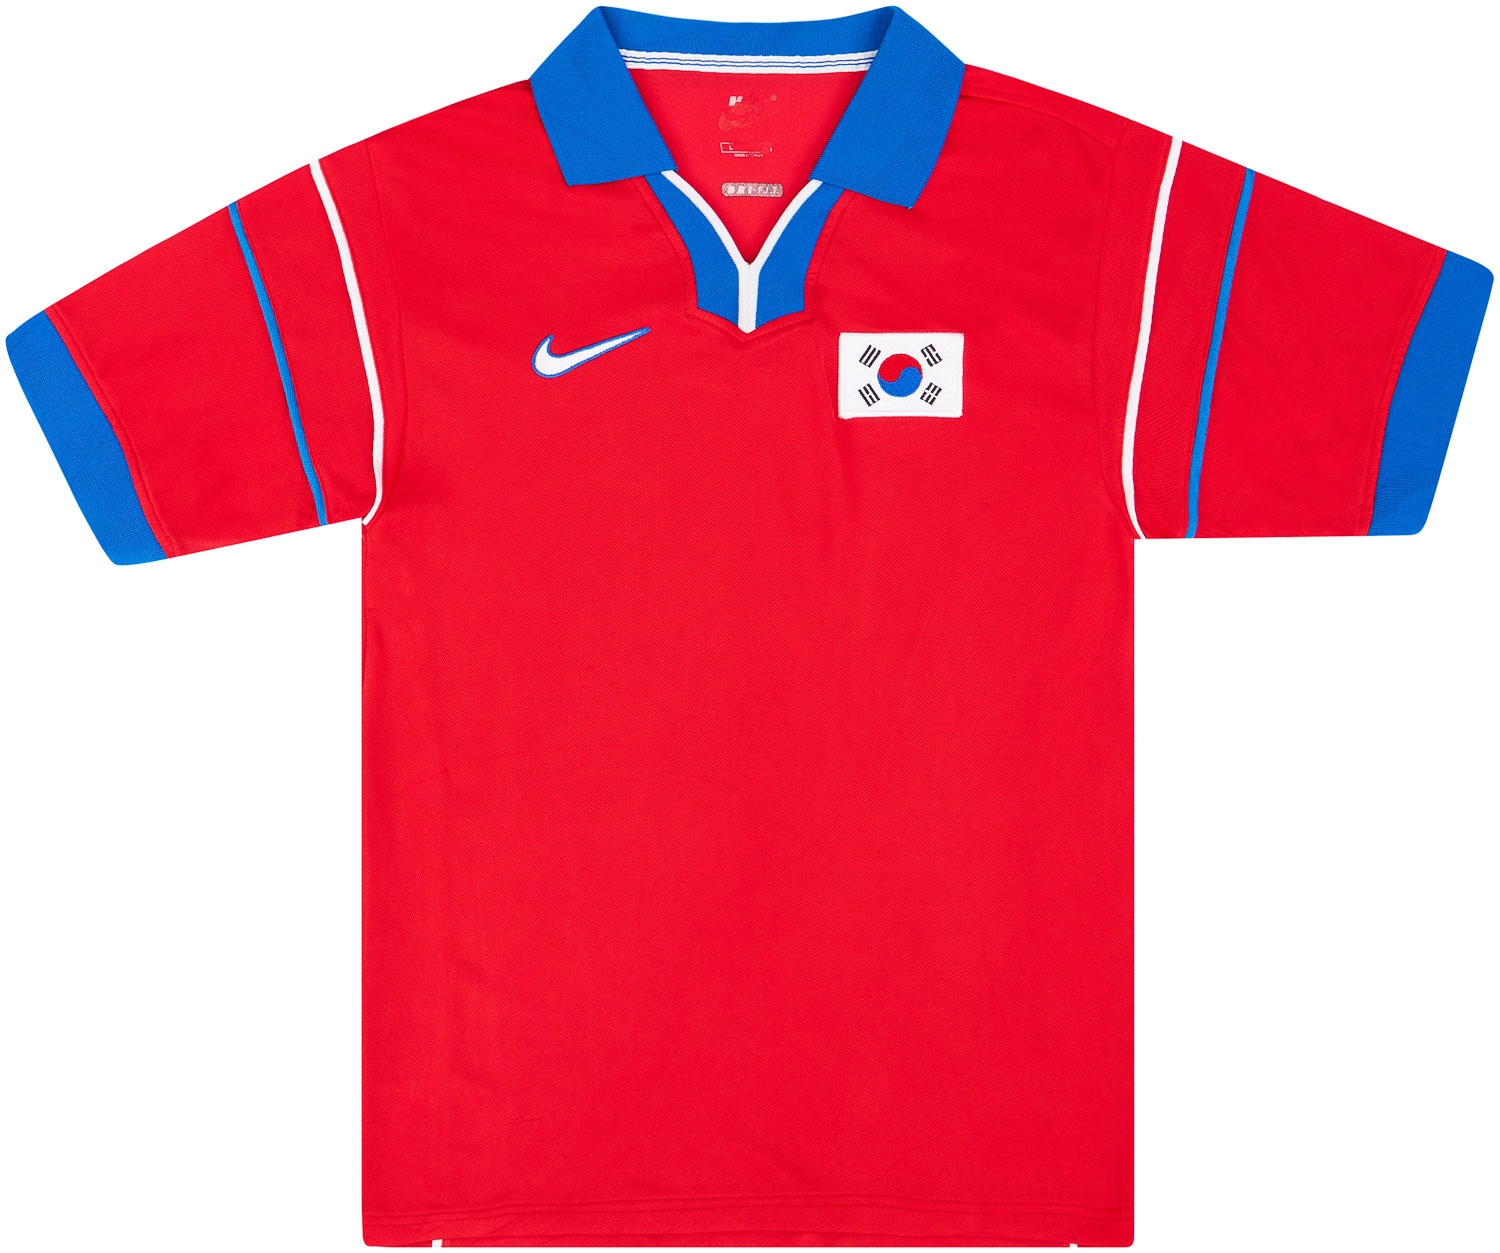 south korea jersey